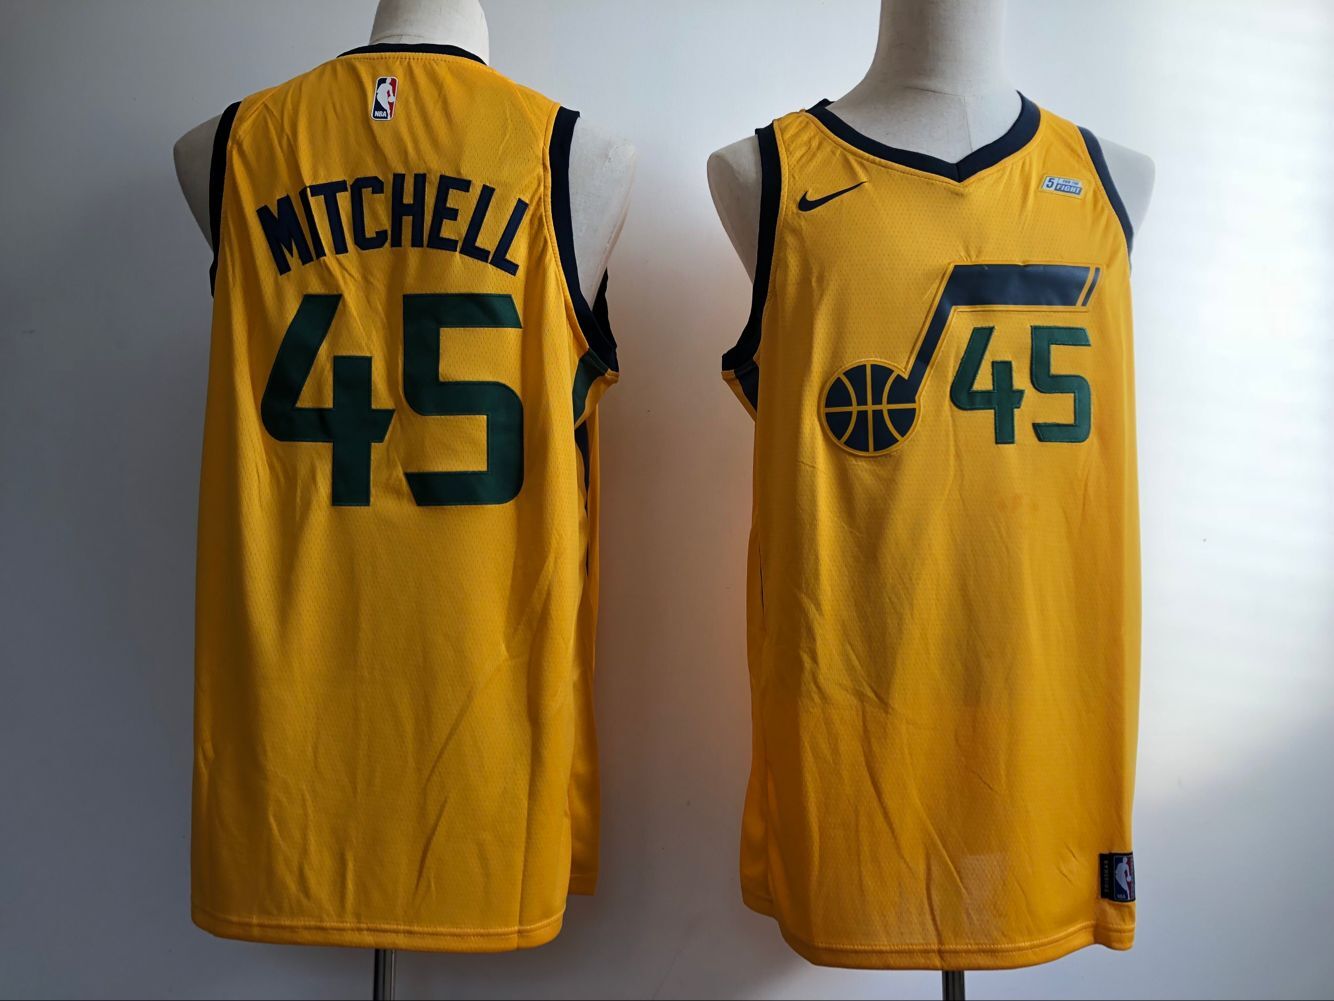 NBA Utah Jazz #45 Mitchell Yellow Nike Jersey